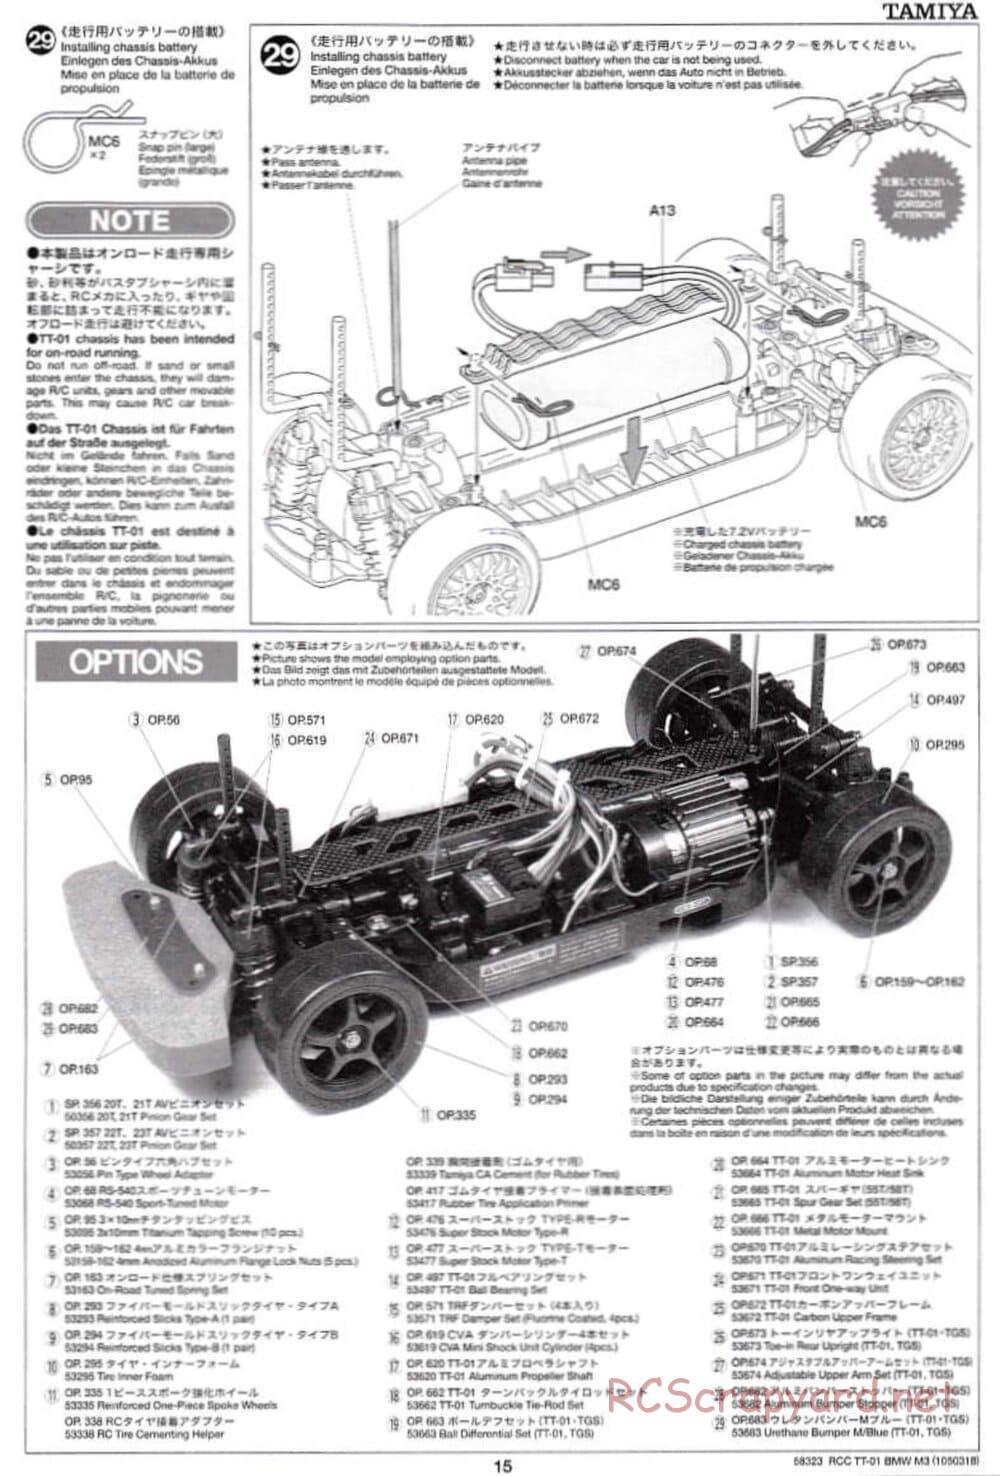 Tamiya - Schnitzer BMW M3 Sport Evo - TT-01 Chassis - Manual - Page 15